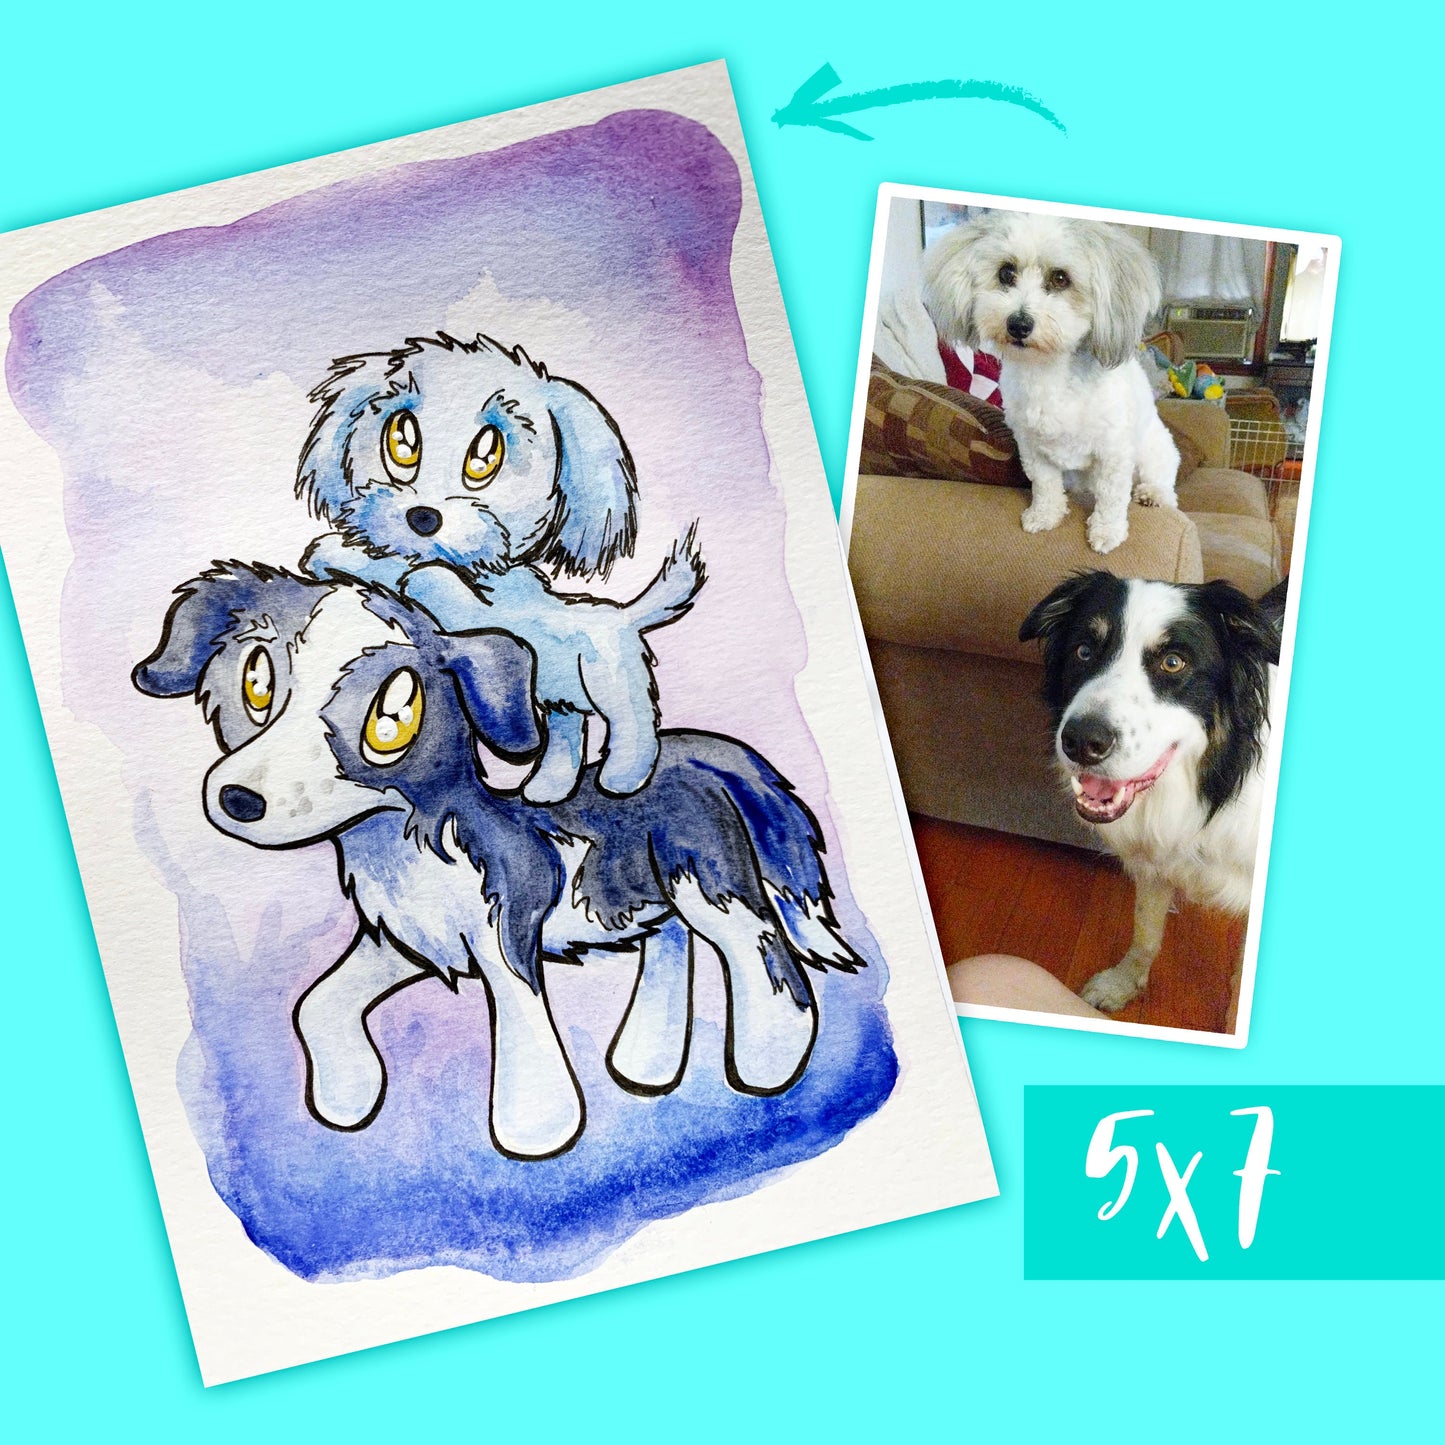 Custom cartoon pet painting: Watercolor art based on YOUR PHOTO